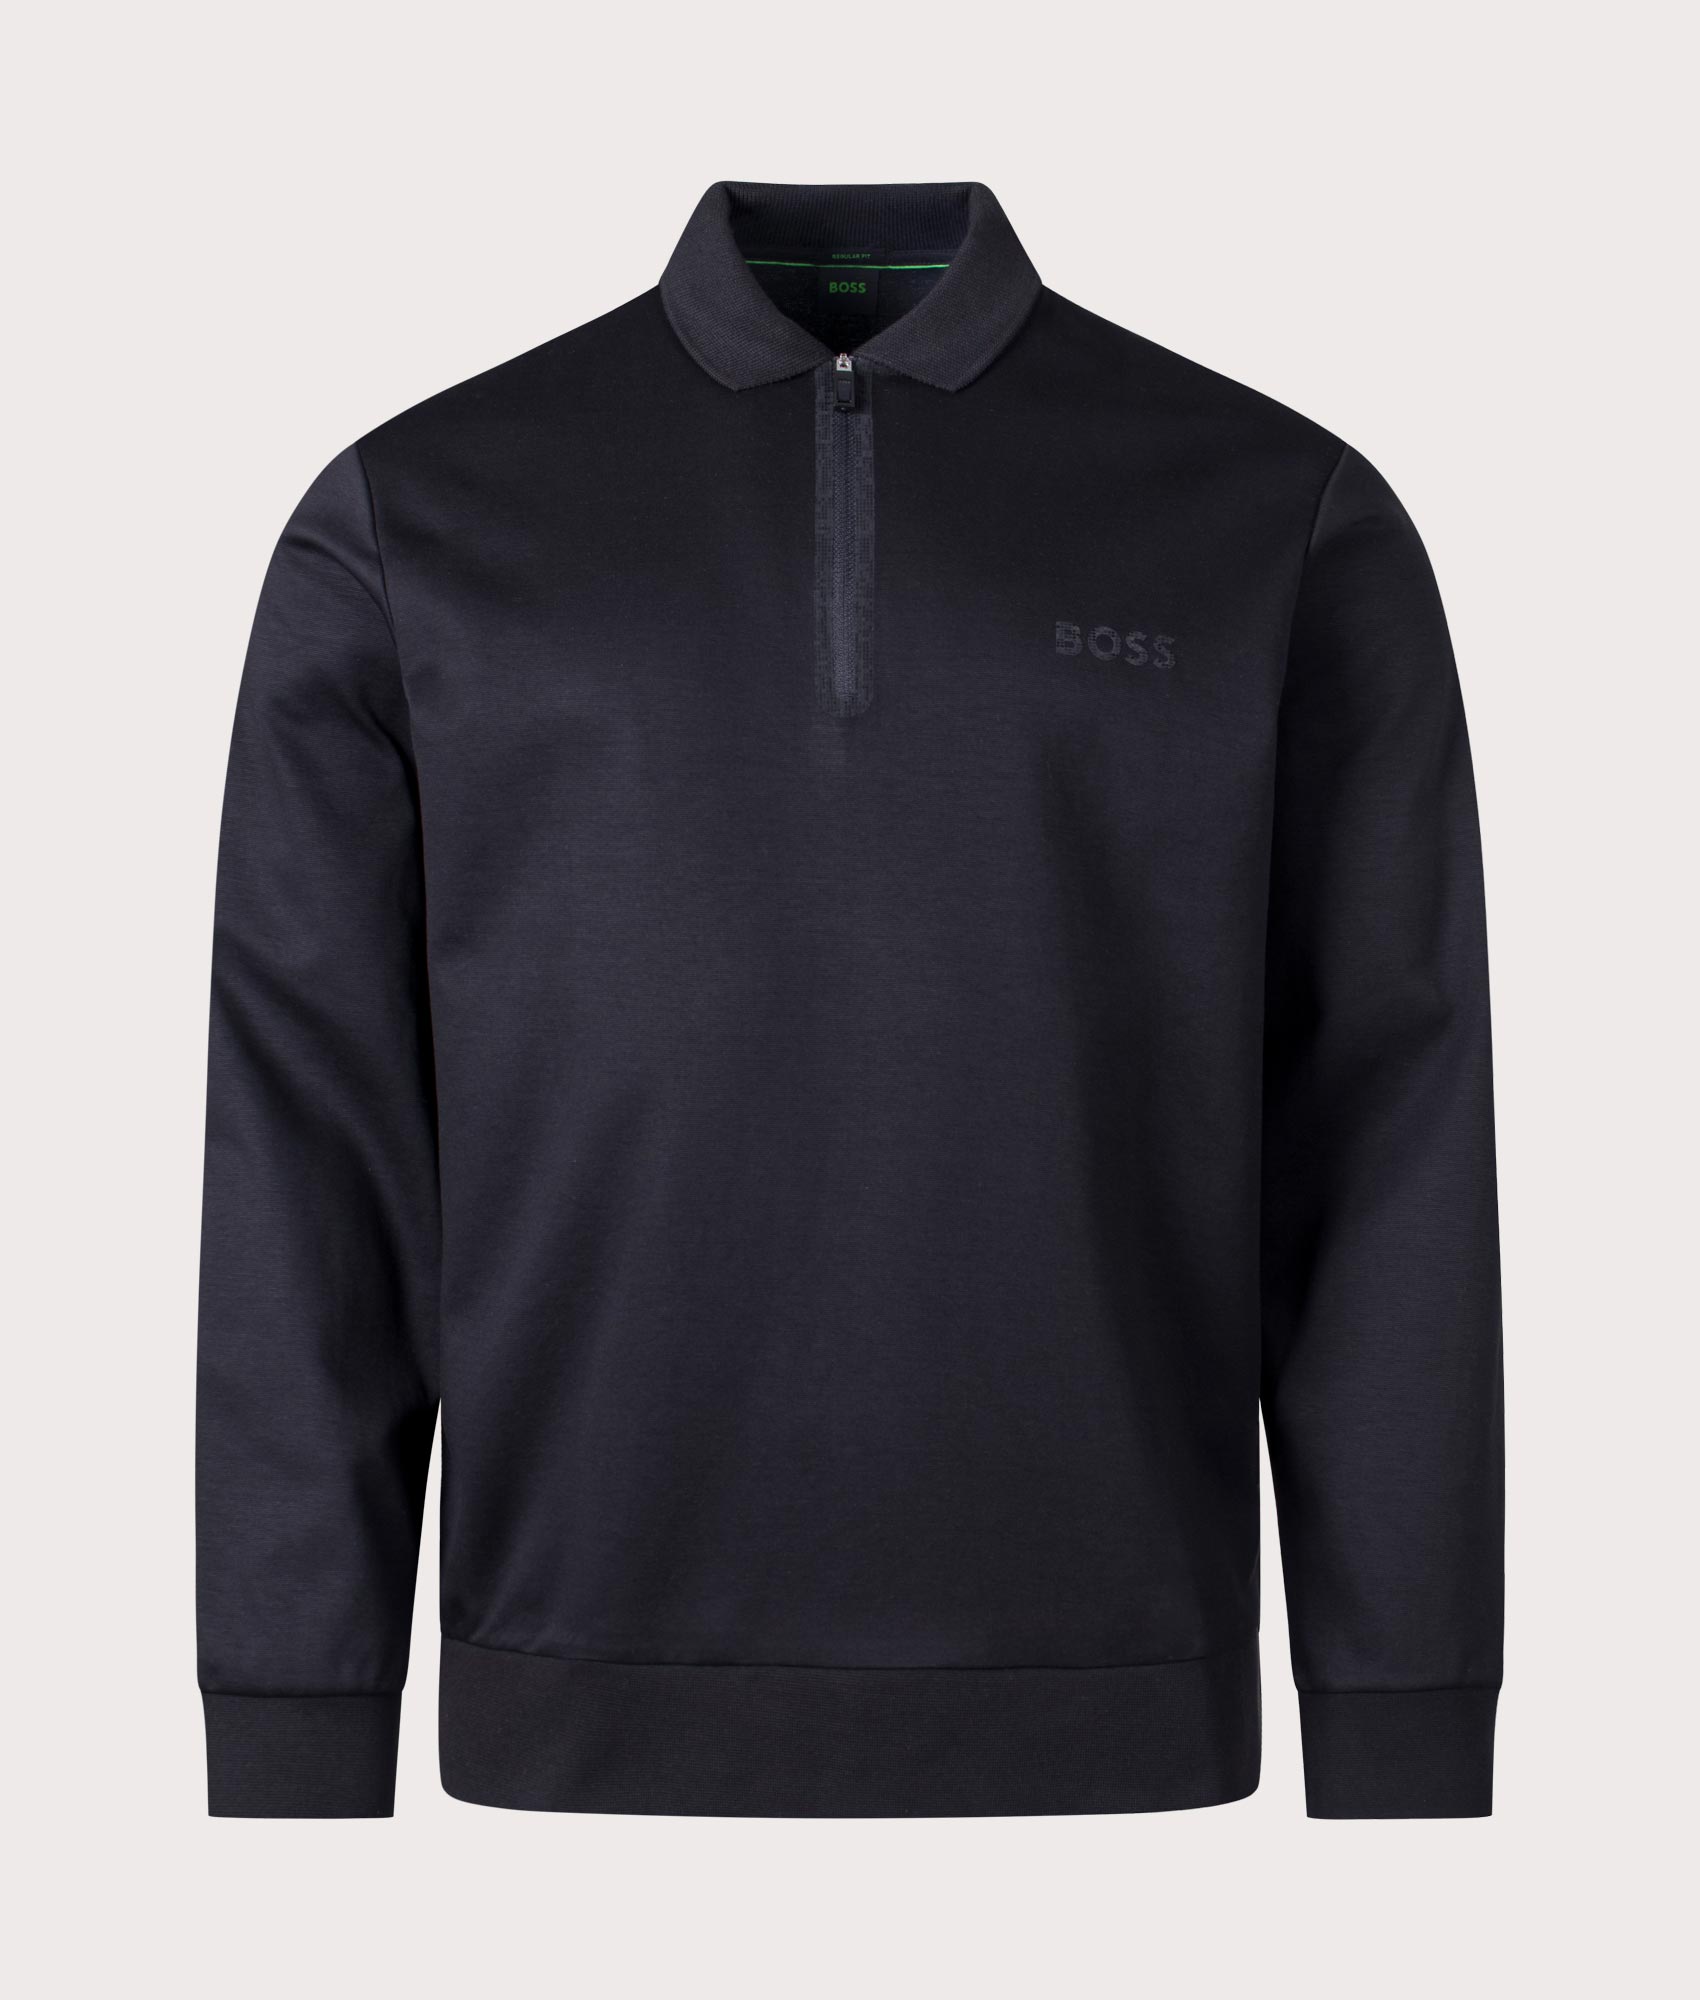 BOSS Mens Plisy Mirror Long Sleeve Polo Shirt - Colour: 001 Black - Size: Medium